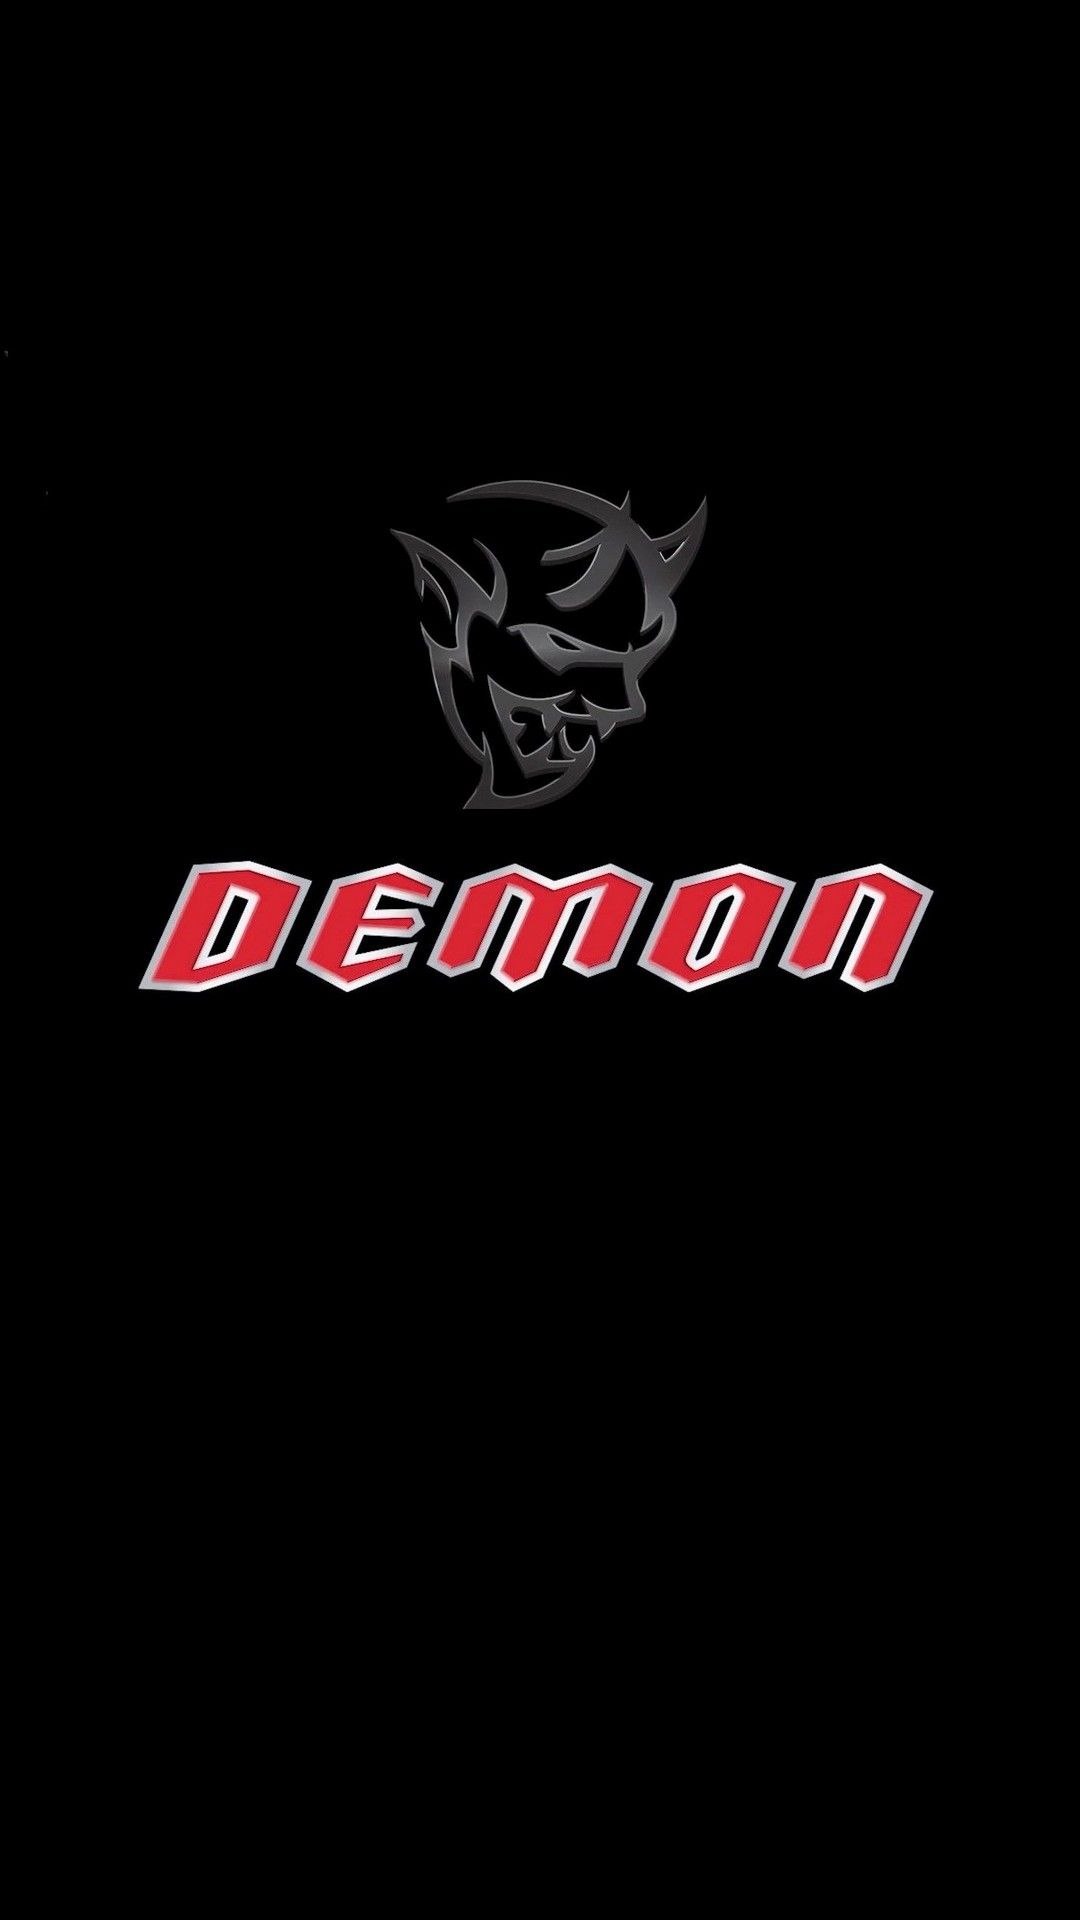 Dodge Demon Logo iPhone Wallpaper iPhonewallpaper Logos